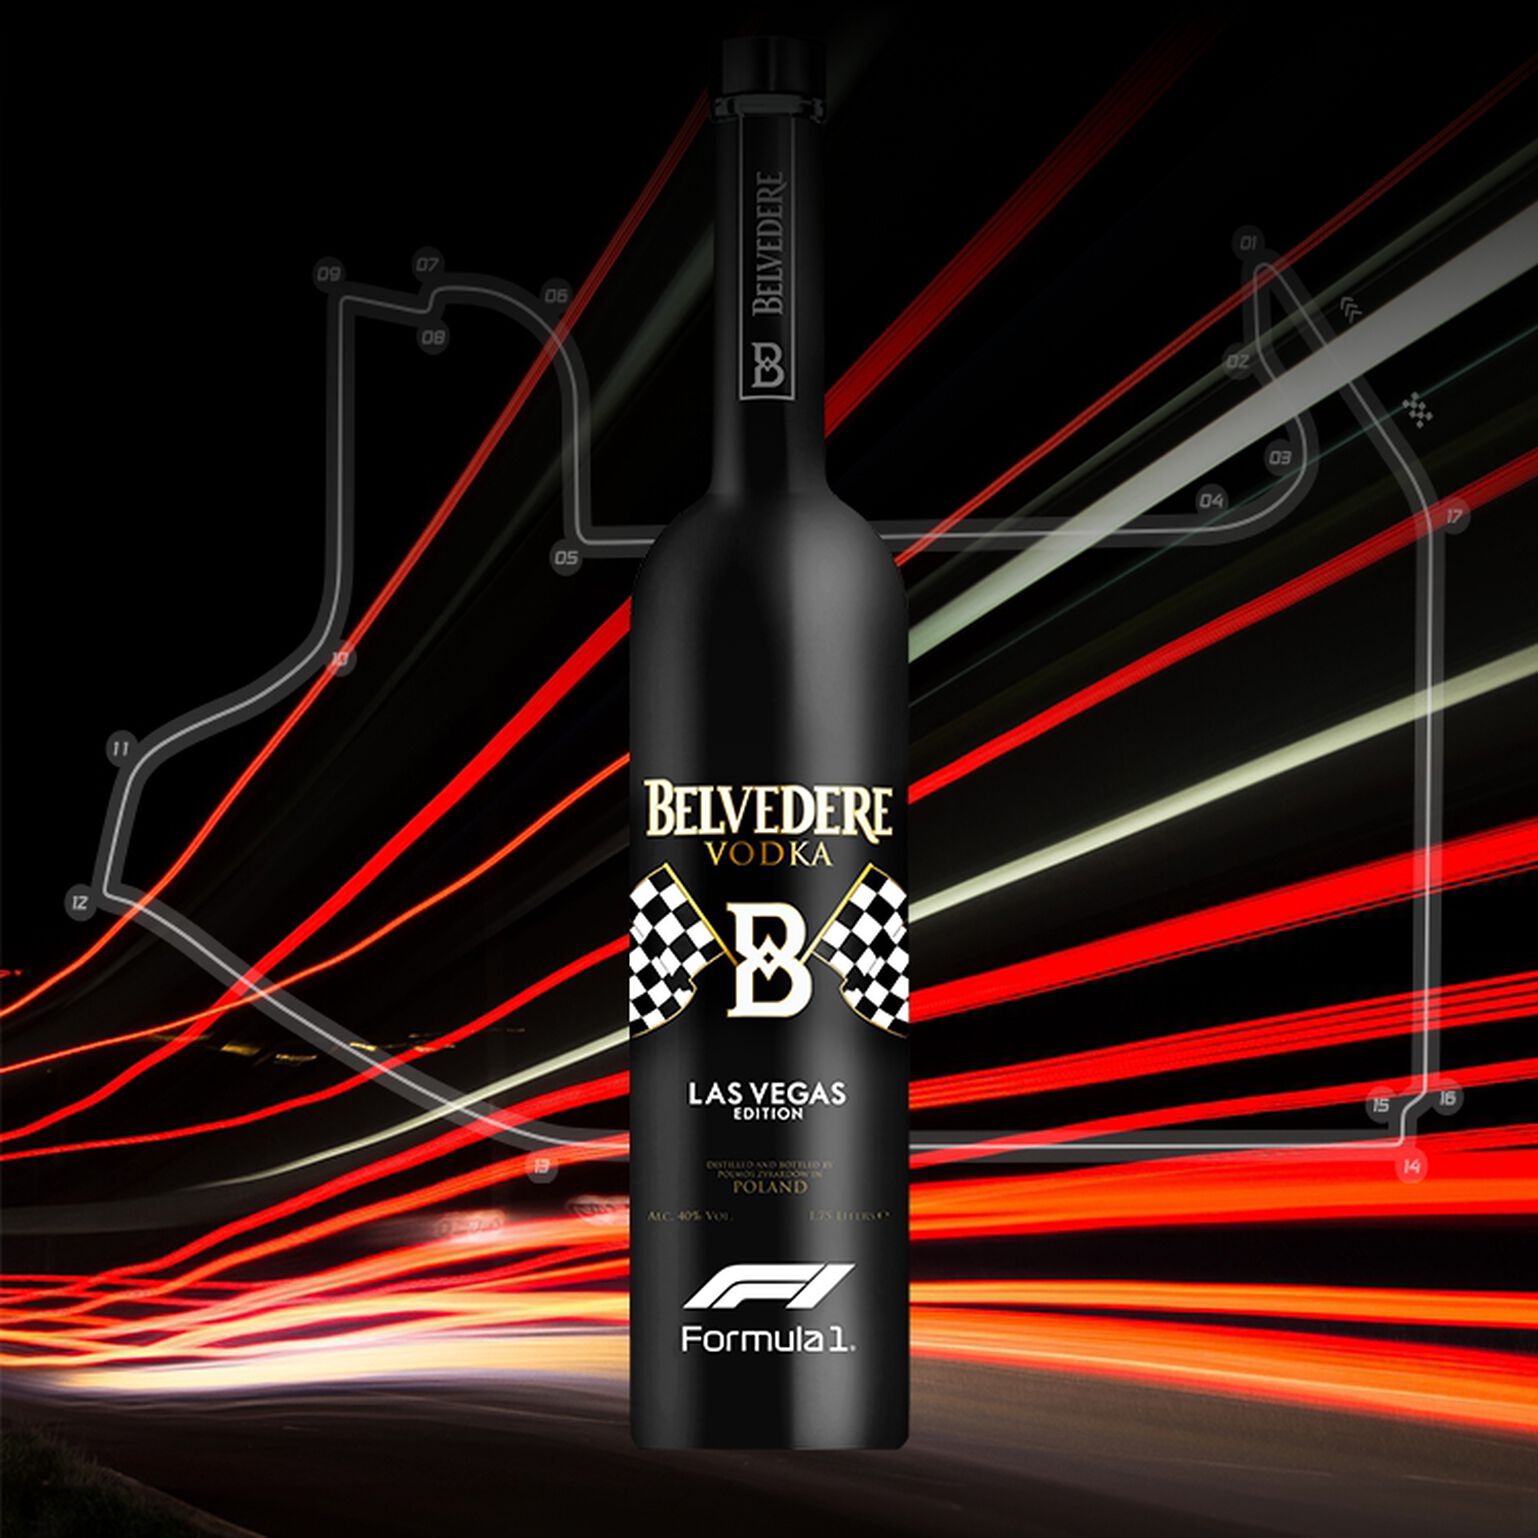 Belvedere 007 Specter edition codka for Sale in Las Vegas, NV